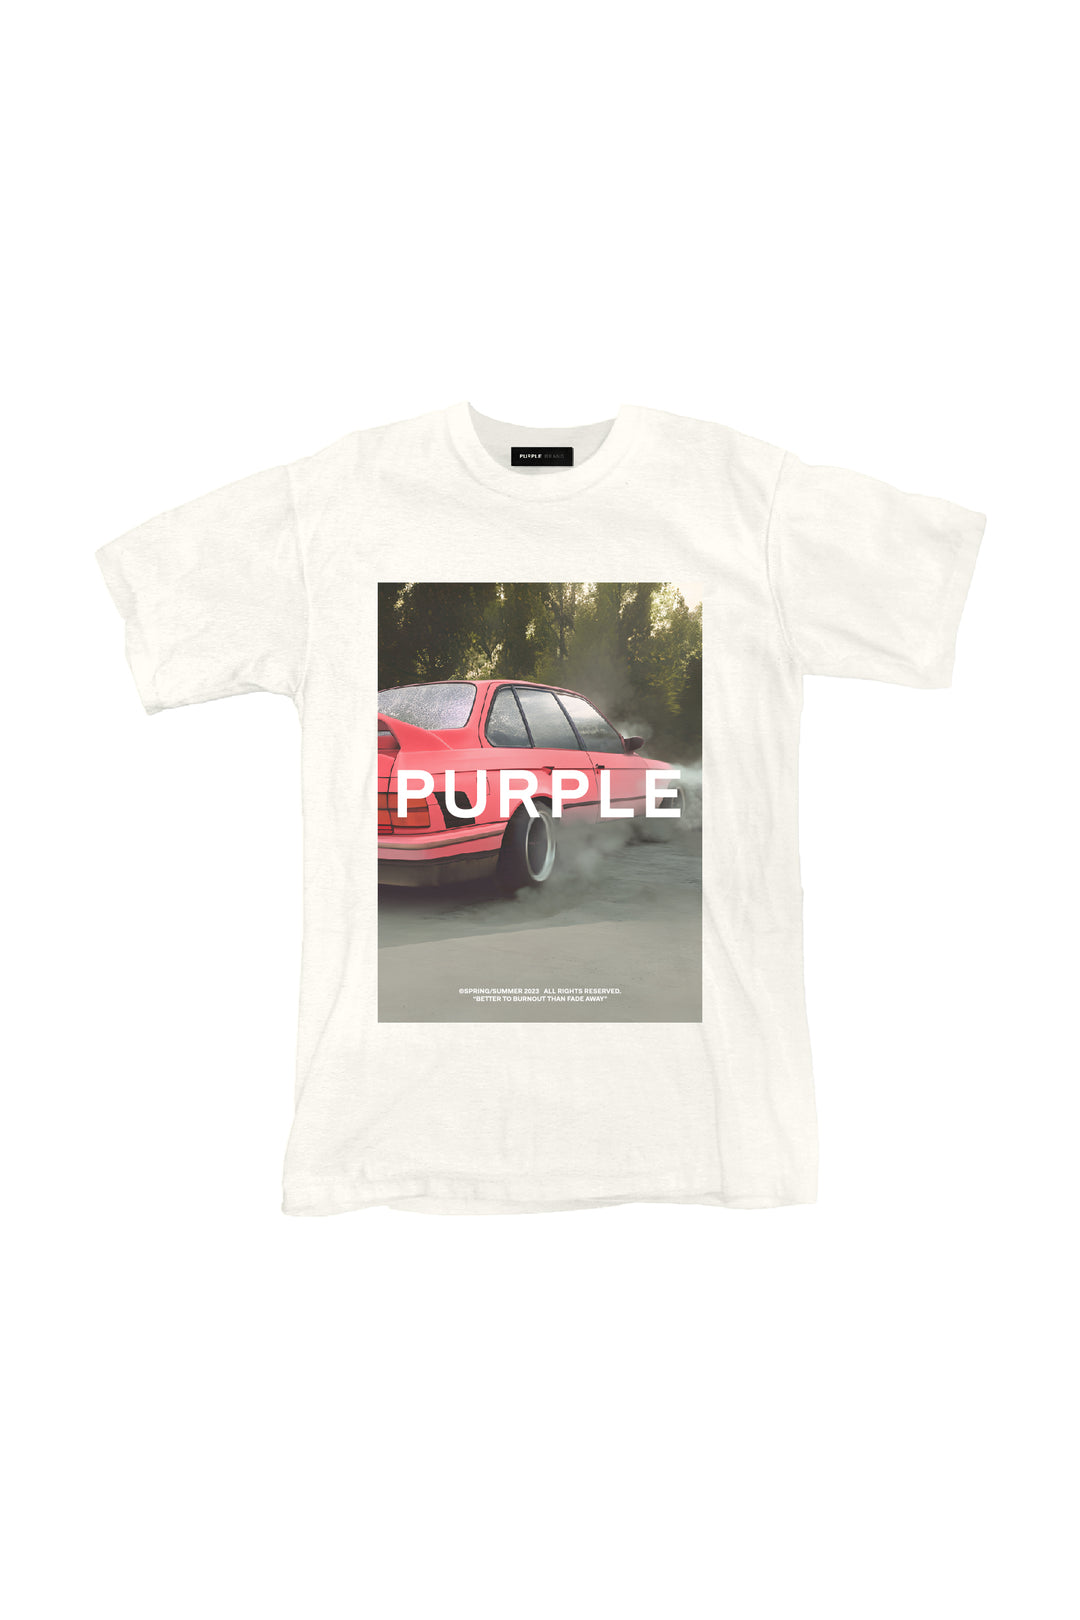 Purple Brand P104 White QRCC823 Burnout T-Shirt - White